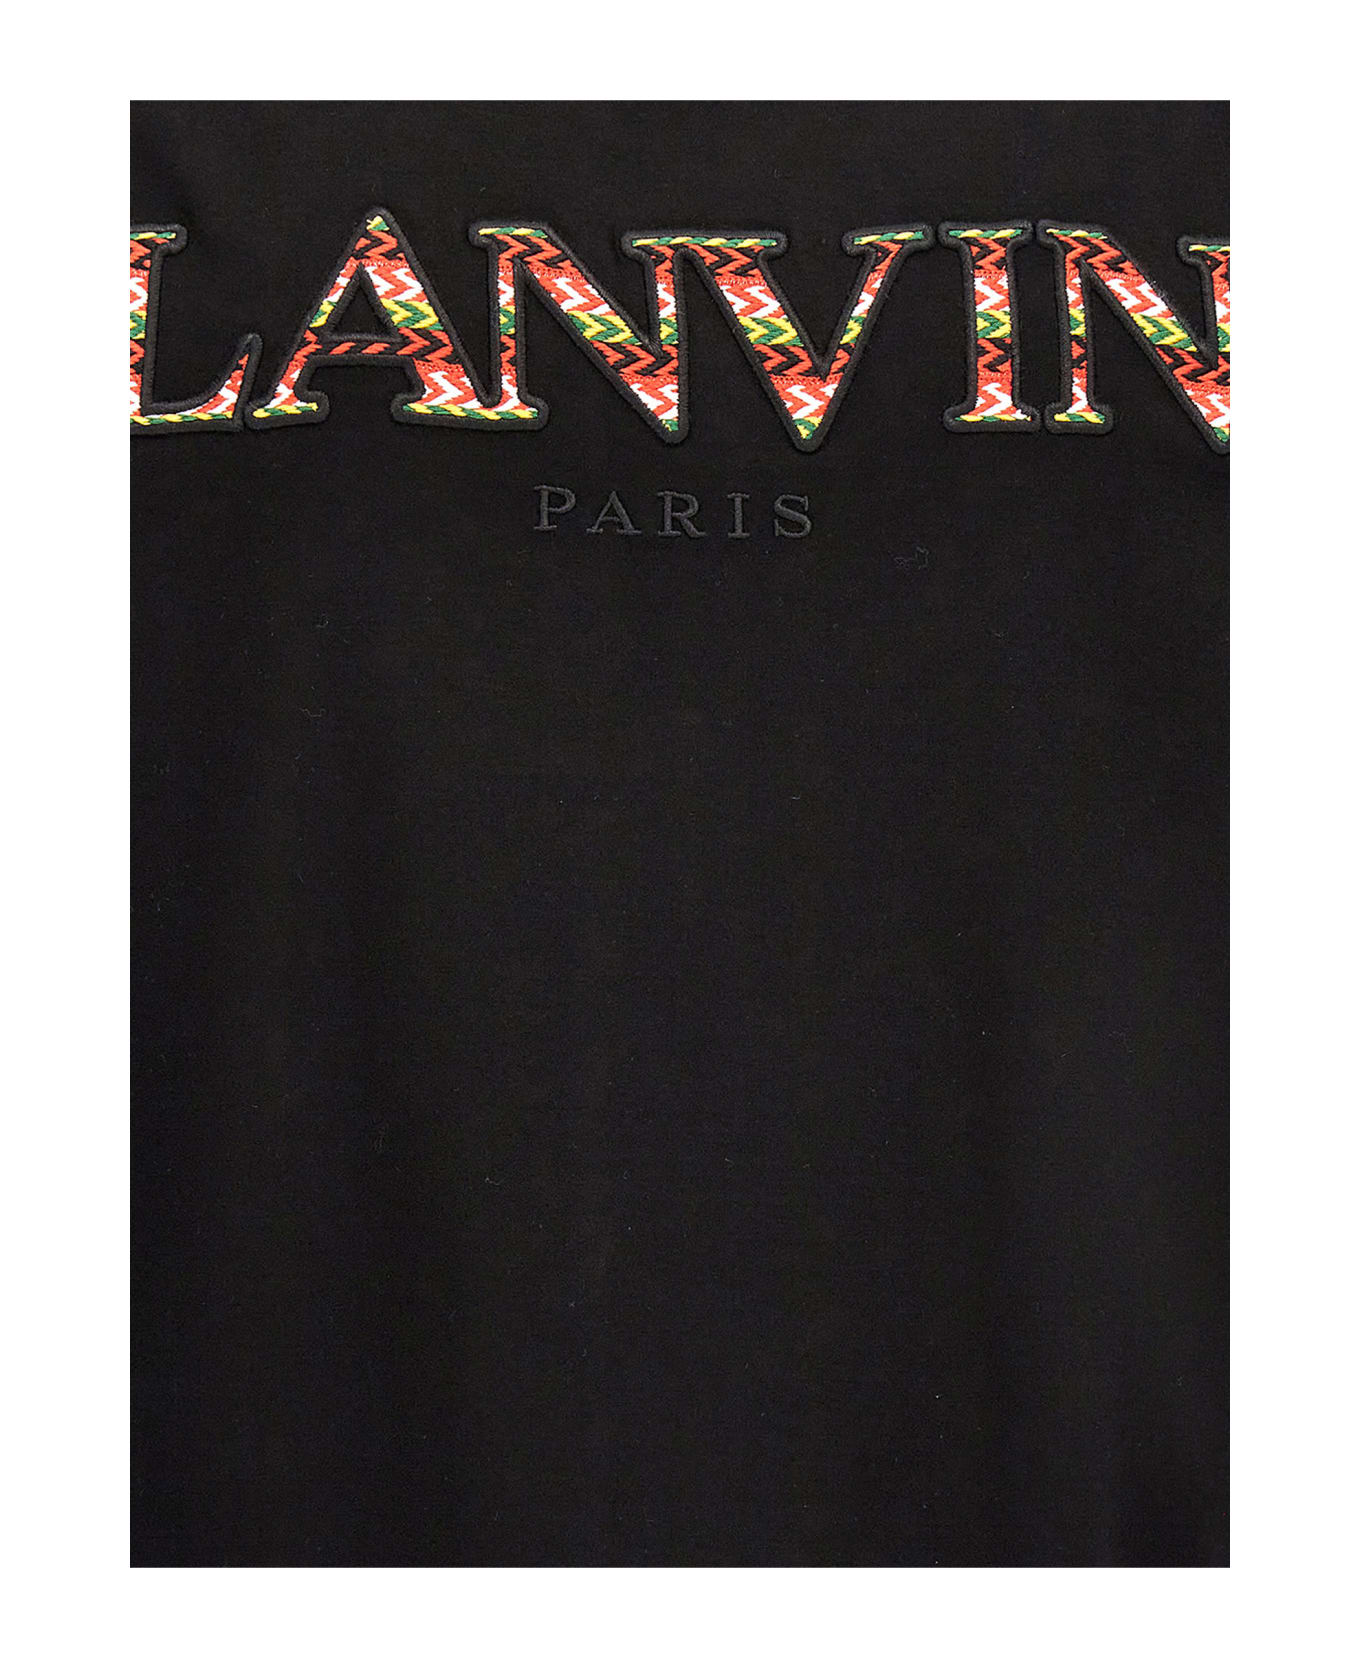 Lanvin Classic Curb T-shirt - Nero シャツ